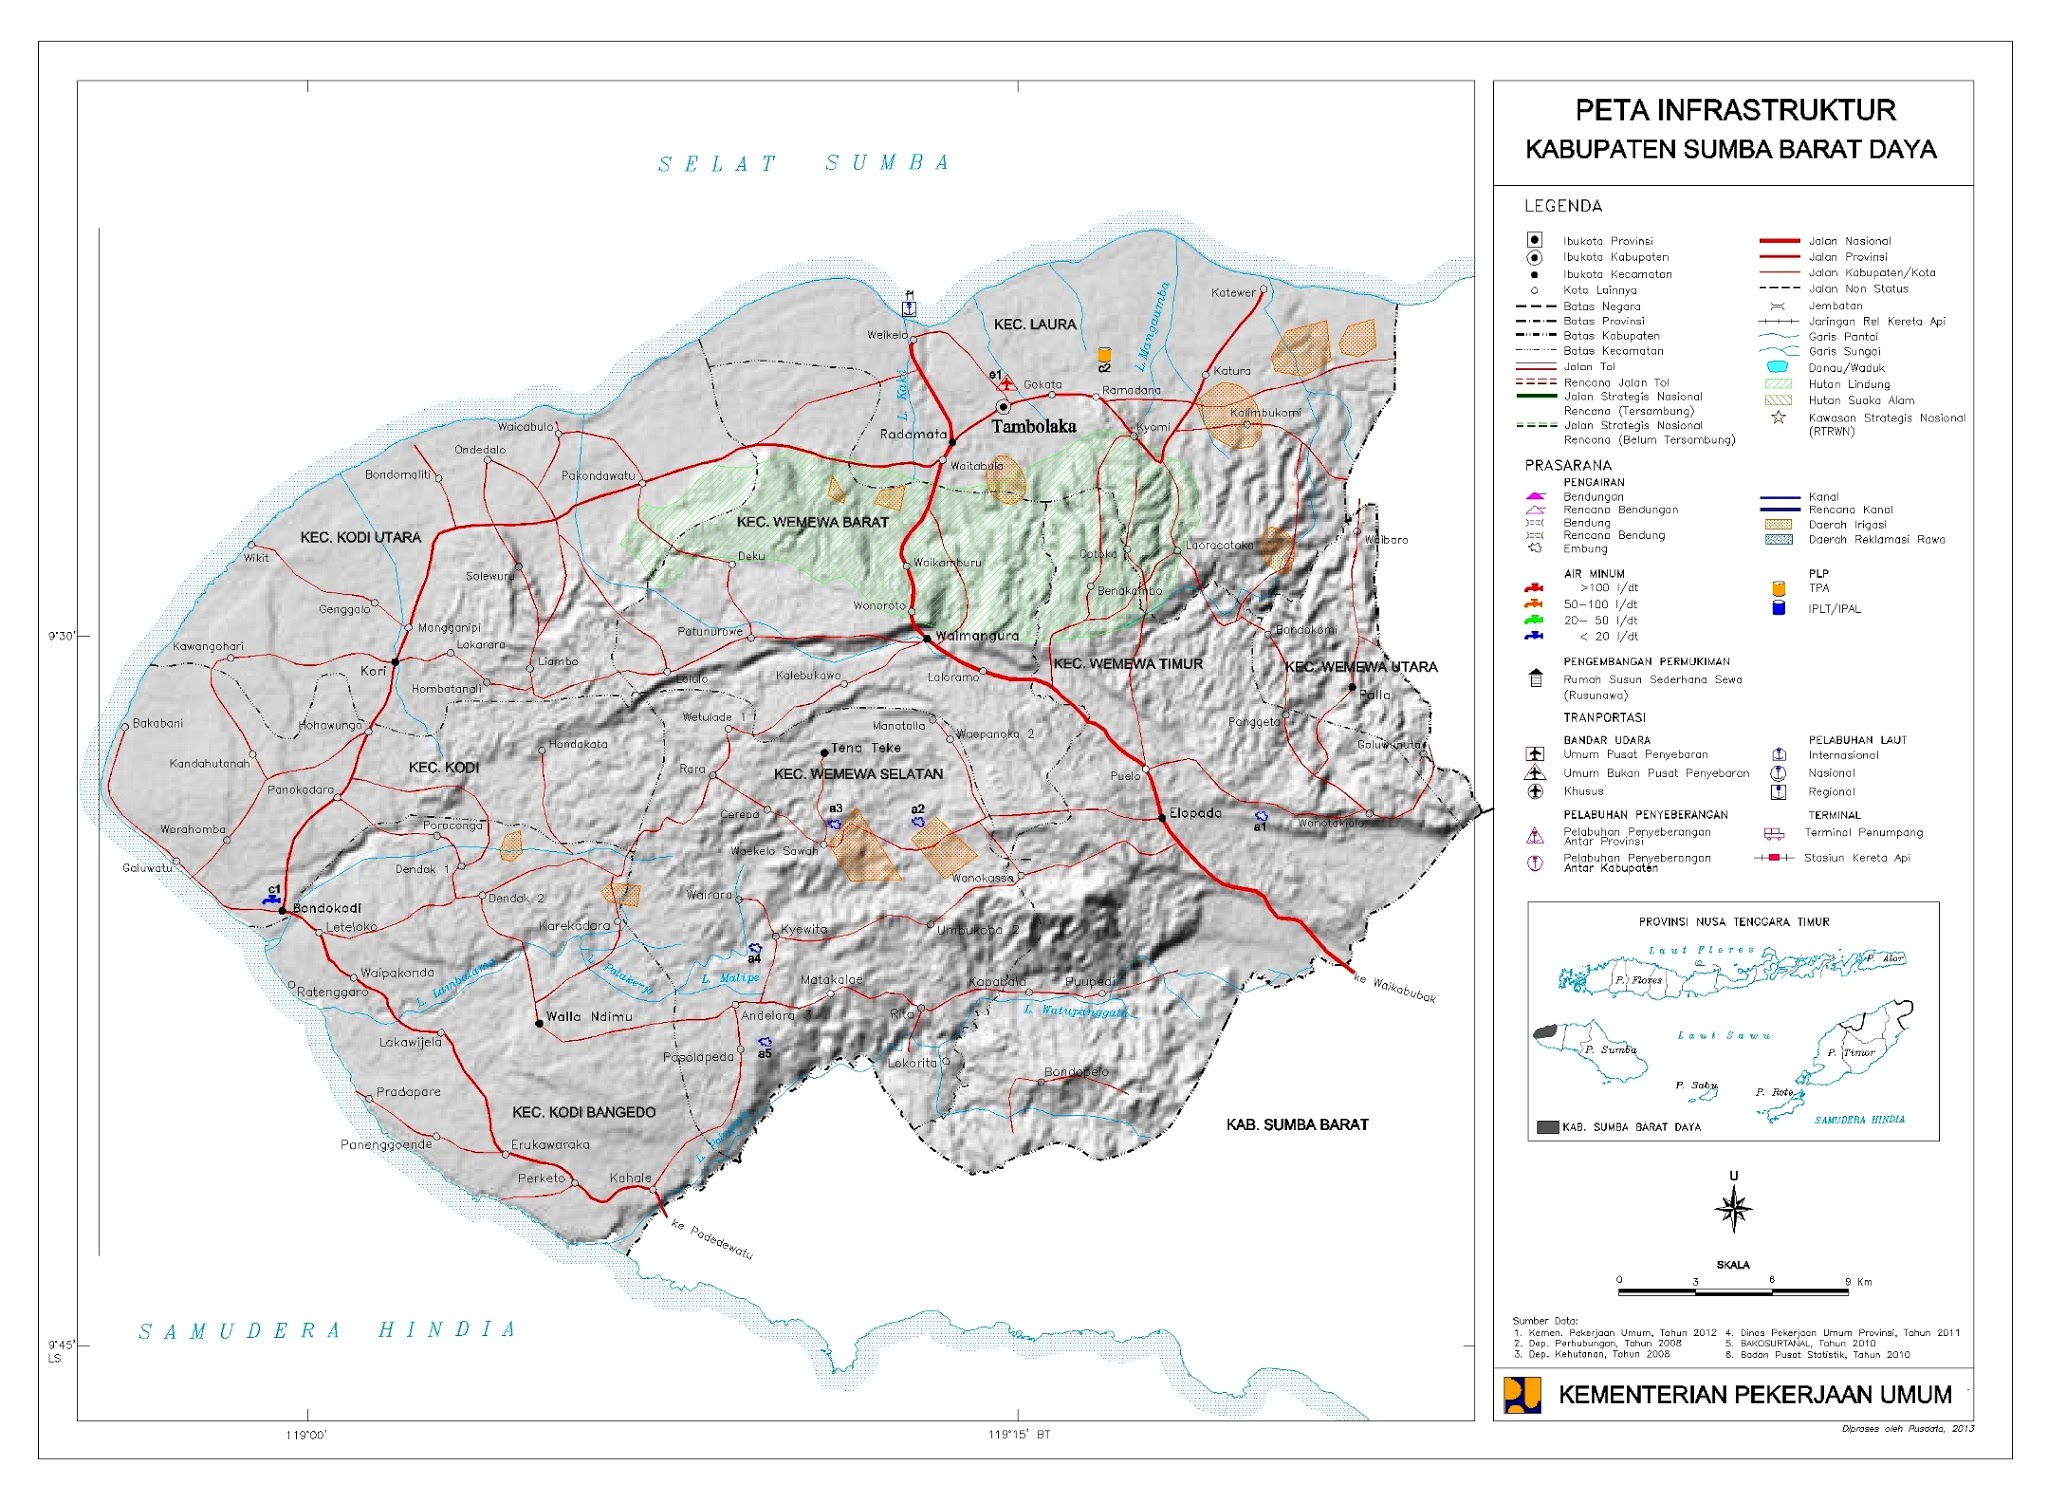 Peta Kota Peta Kabupaten Sumba Barat Daya